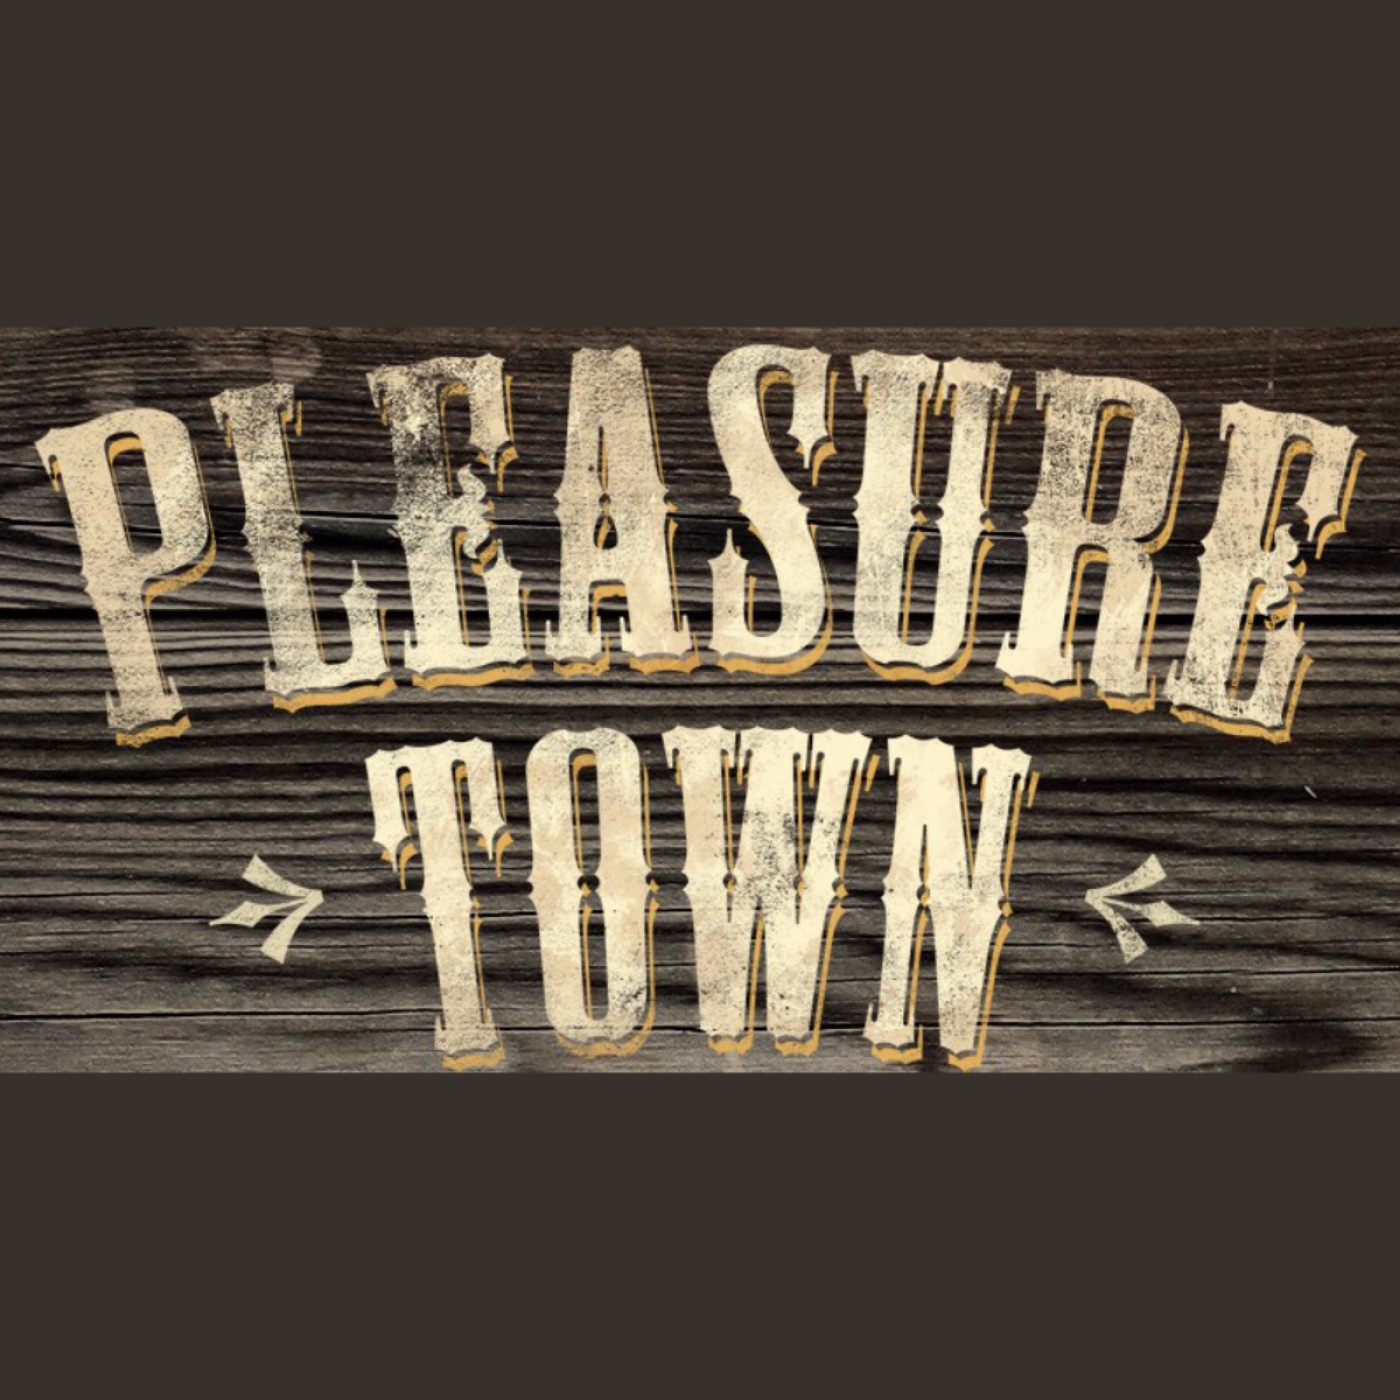 PleasureTown